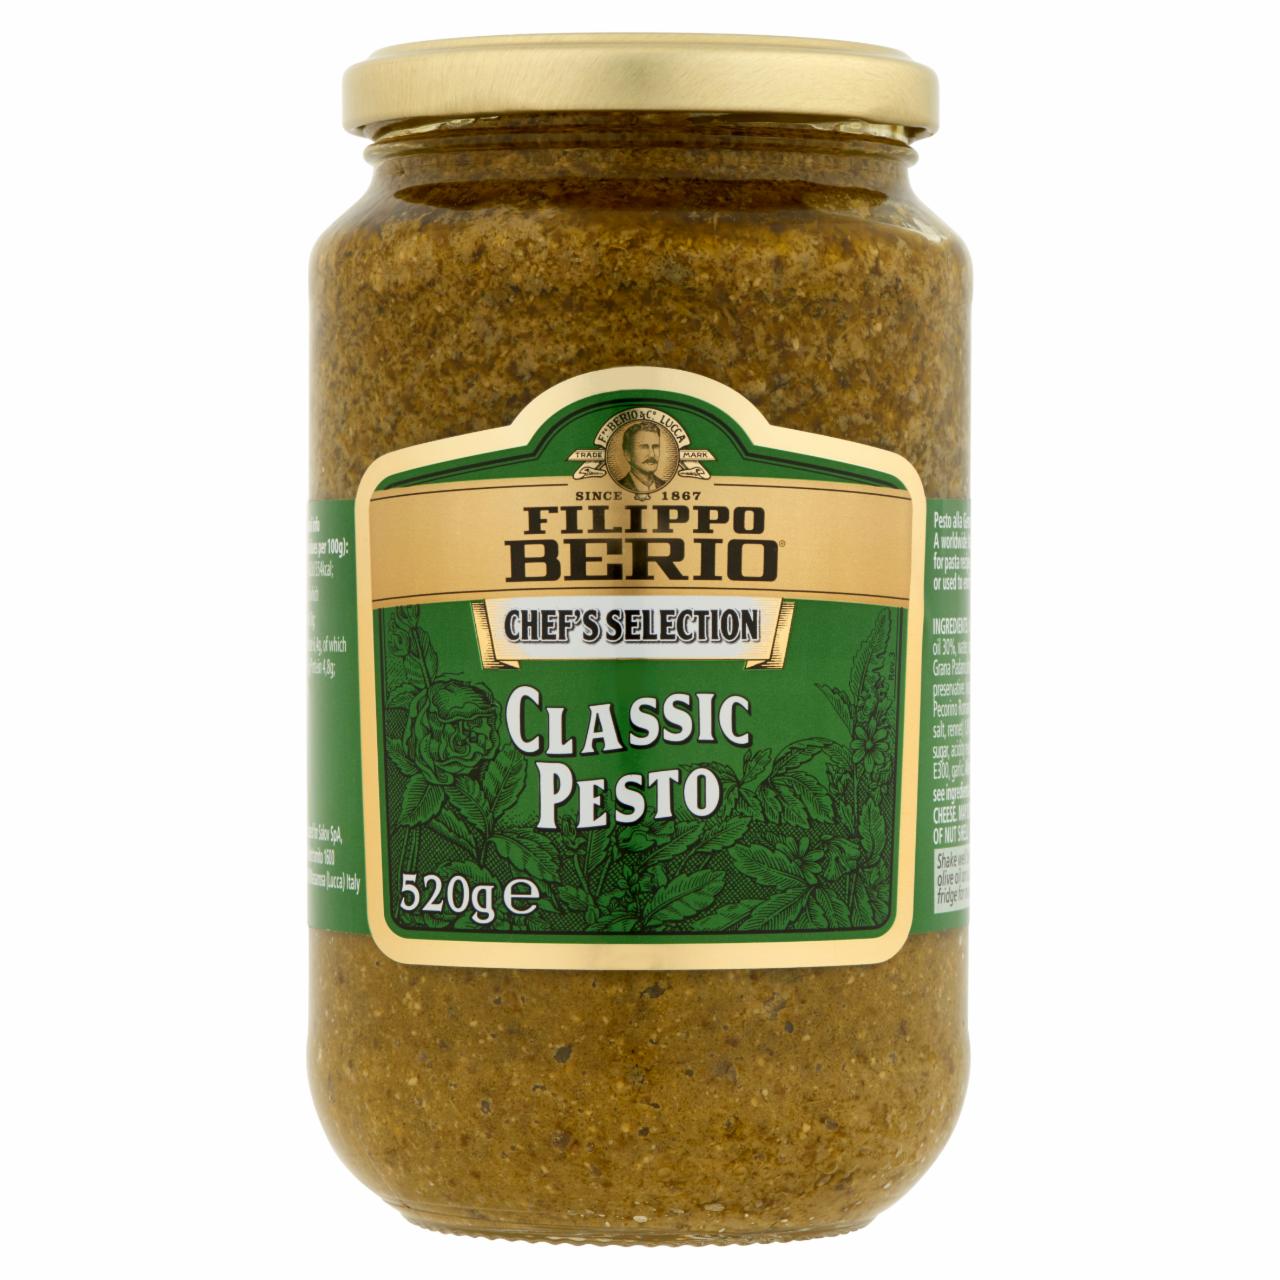 Képek - Filippo Berio Chef's Selection Classic Pesto bazsalikomos fűszerszósz 520 g